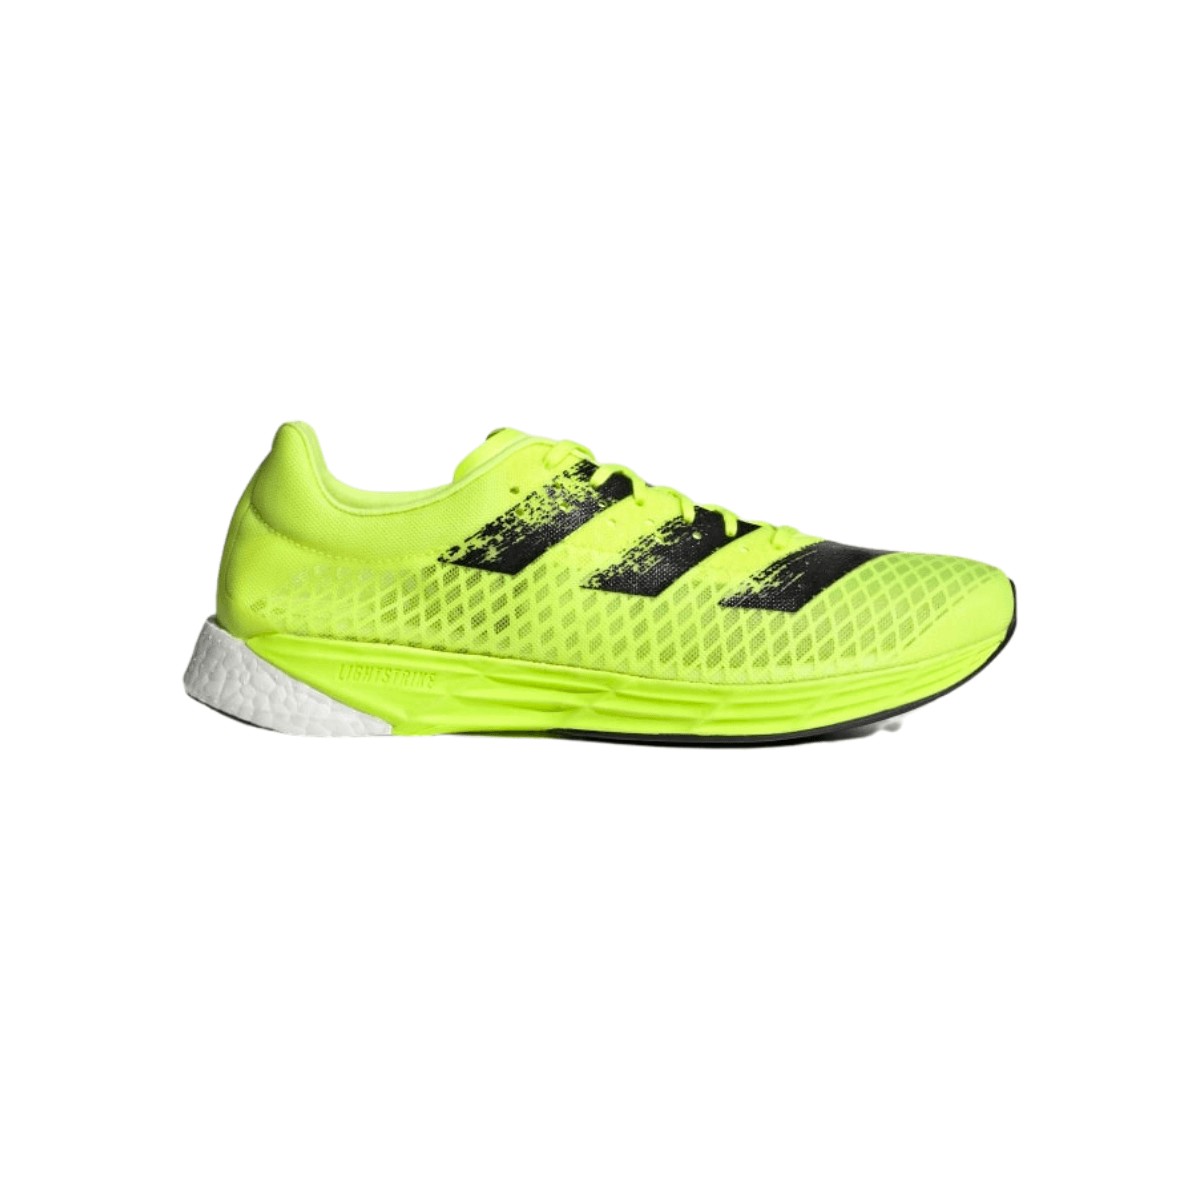 Adidas Adizero Pro Yellow Fluor Black Sneakers